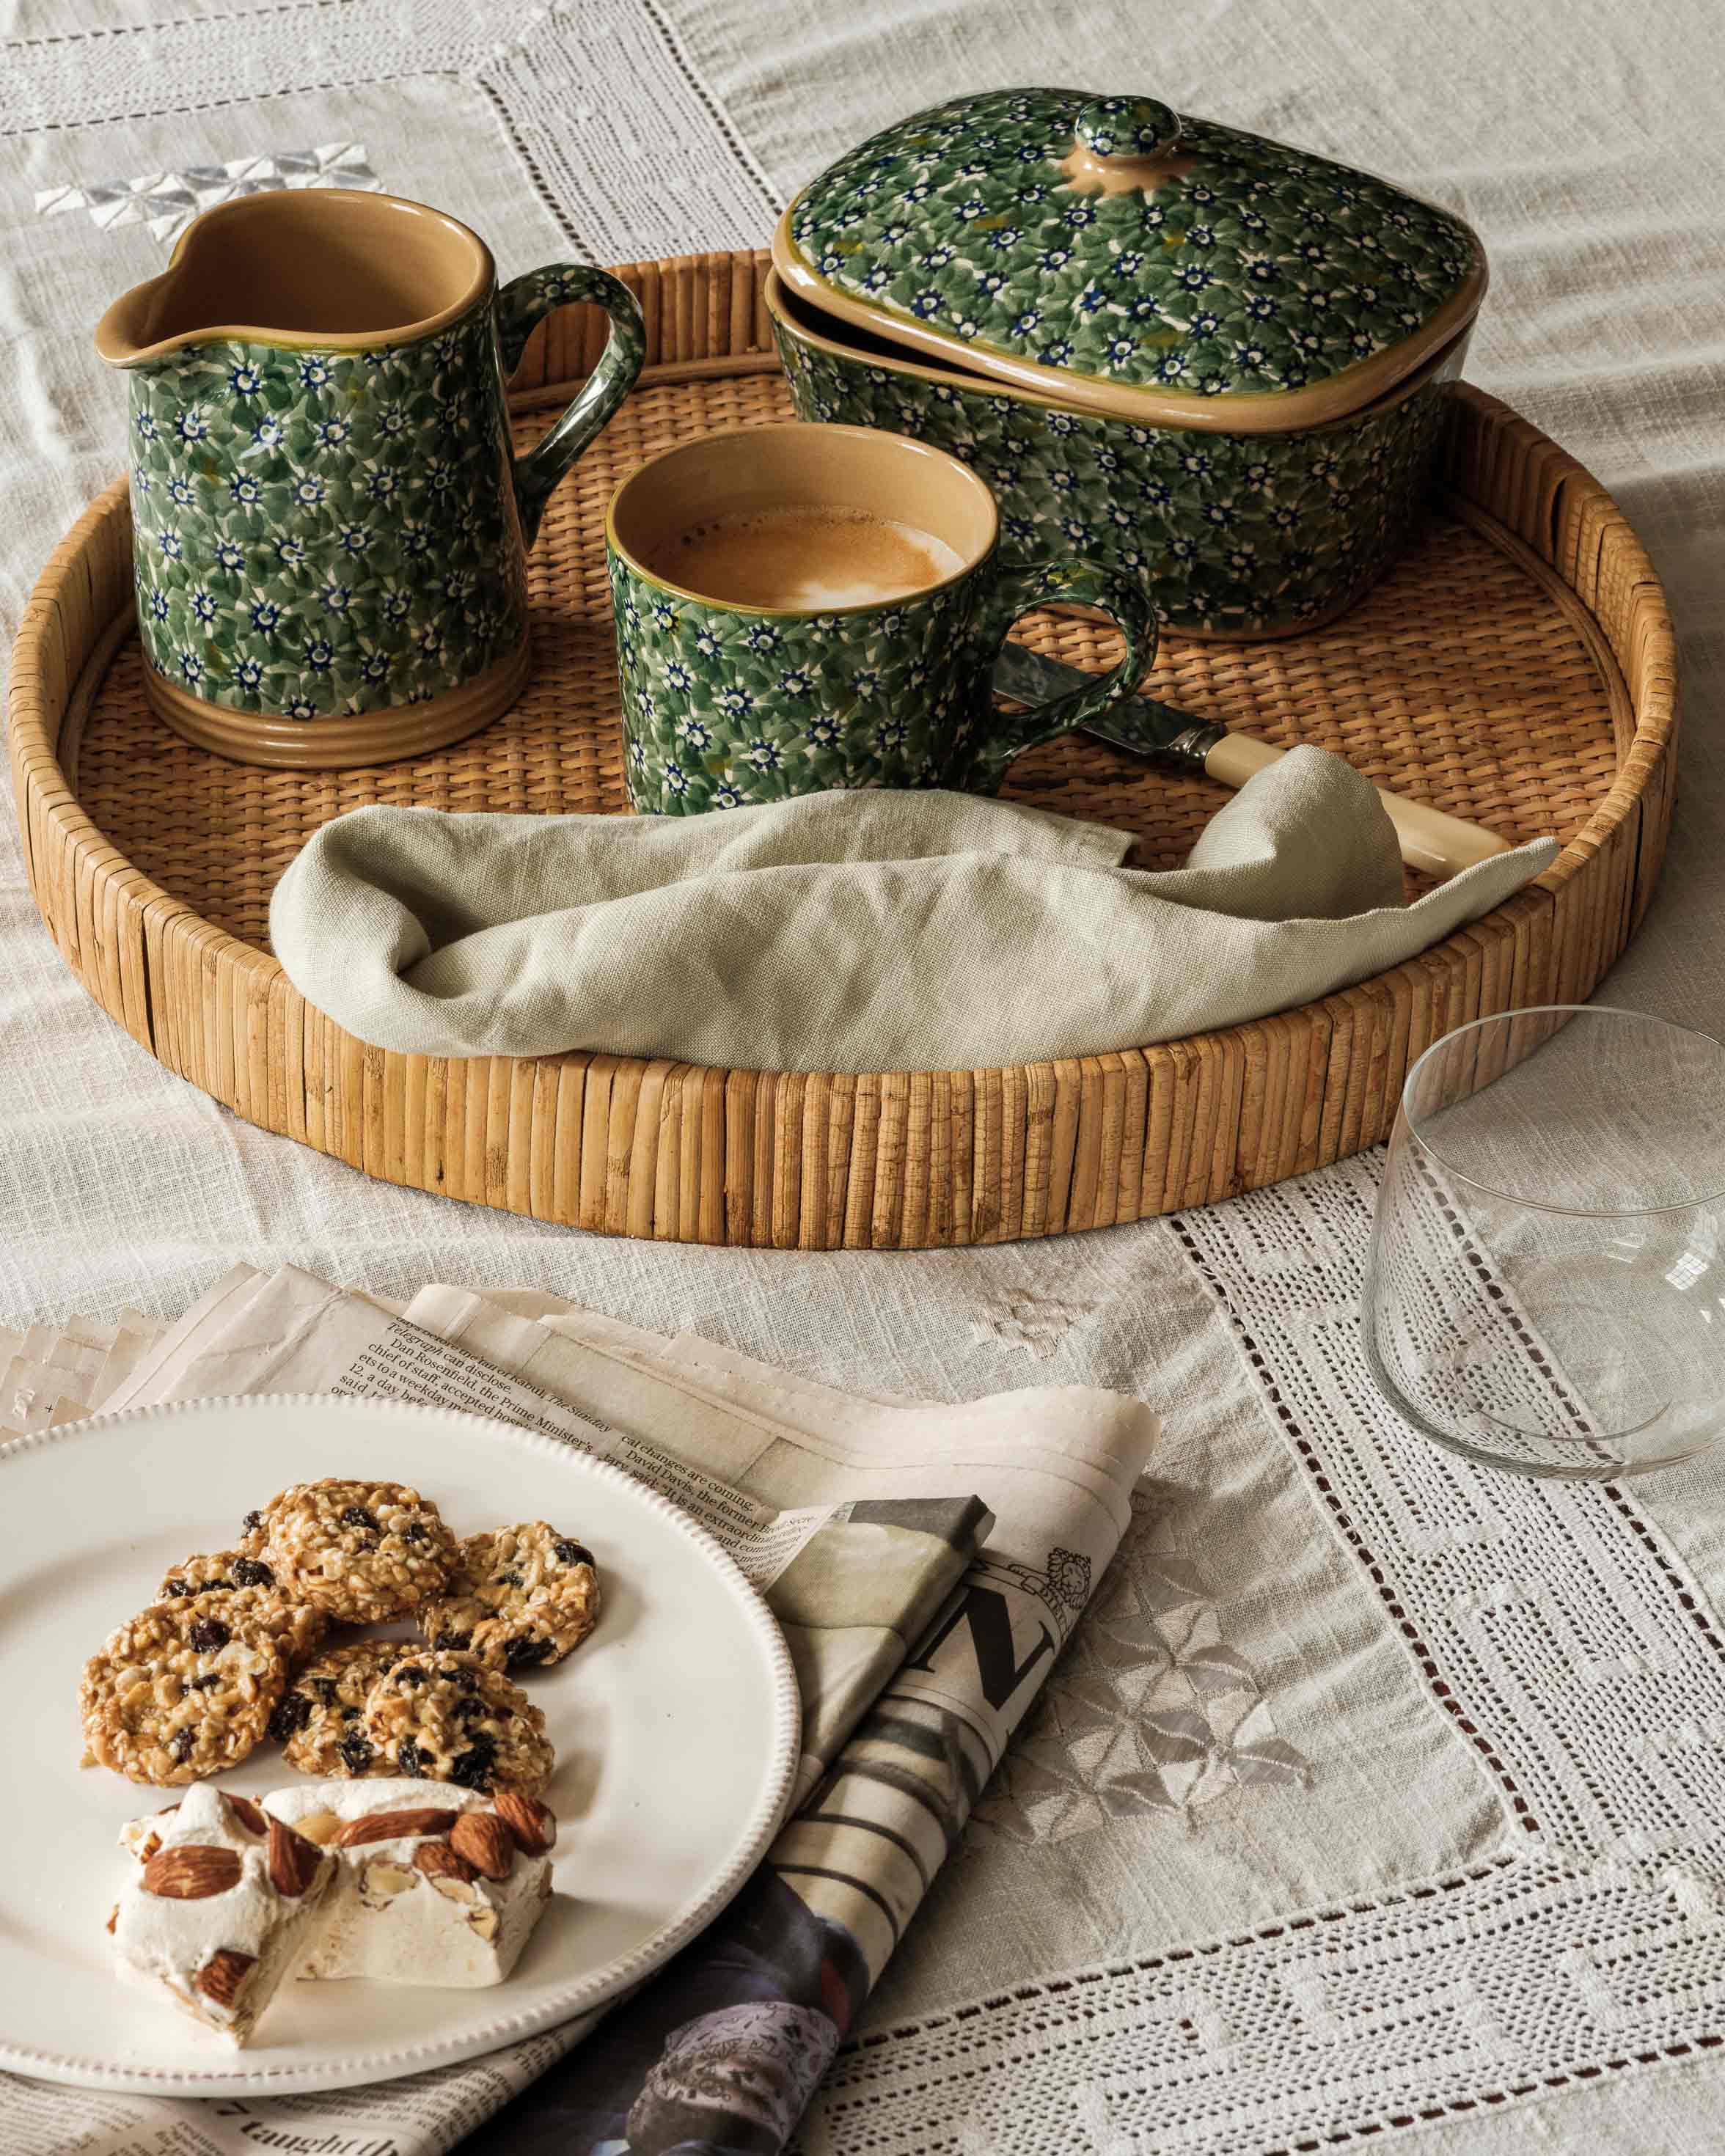 Kenmare Handmade Green Ceramic Butter Dish | Anboise Tableware